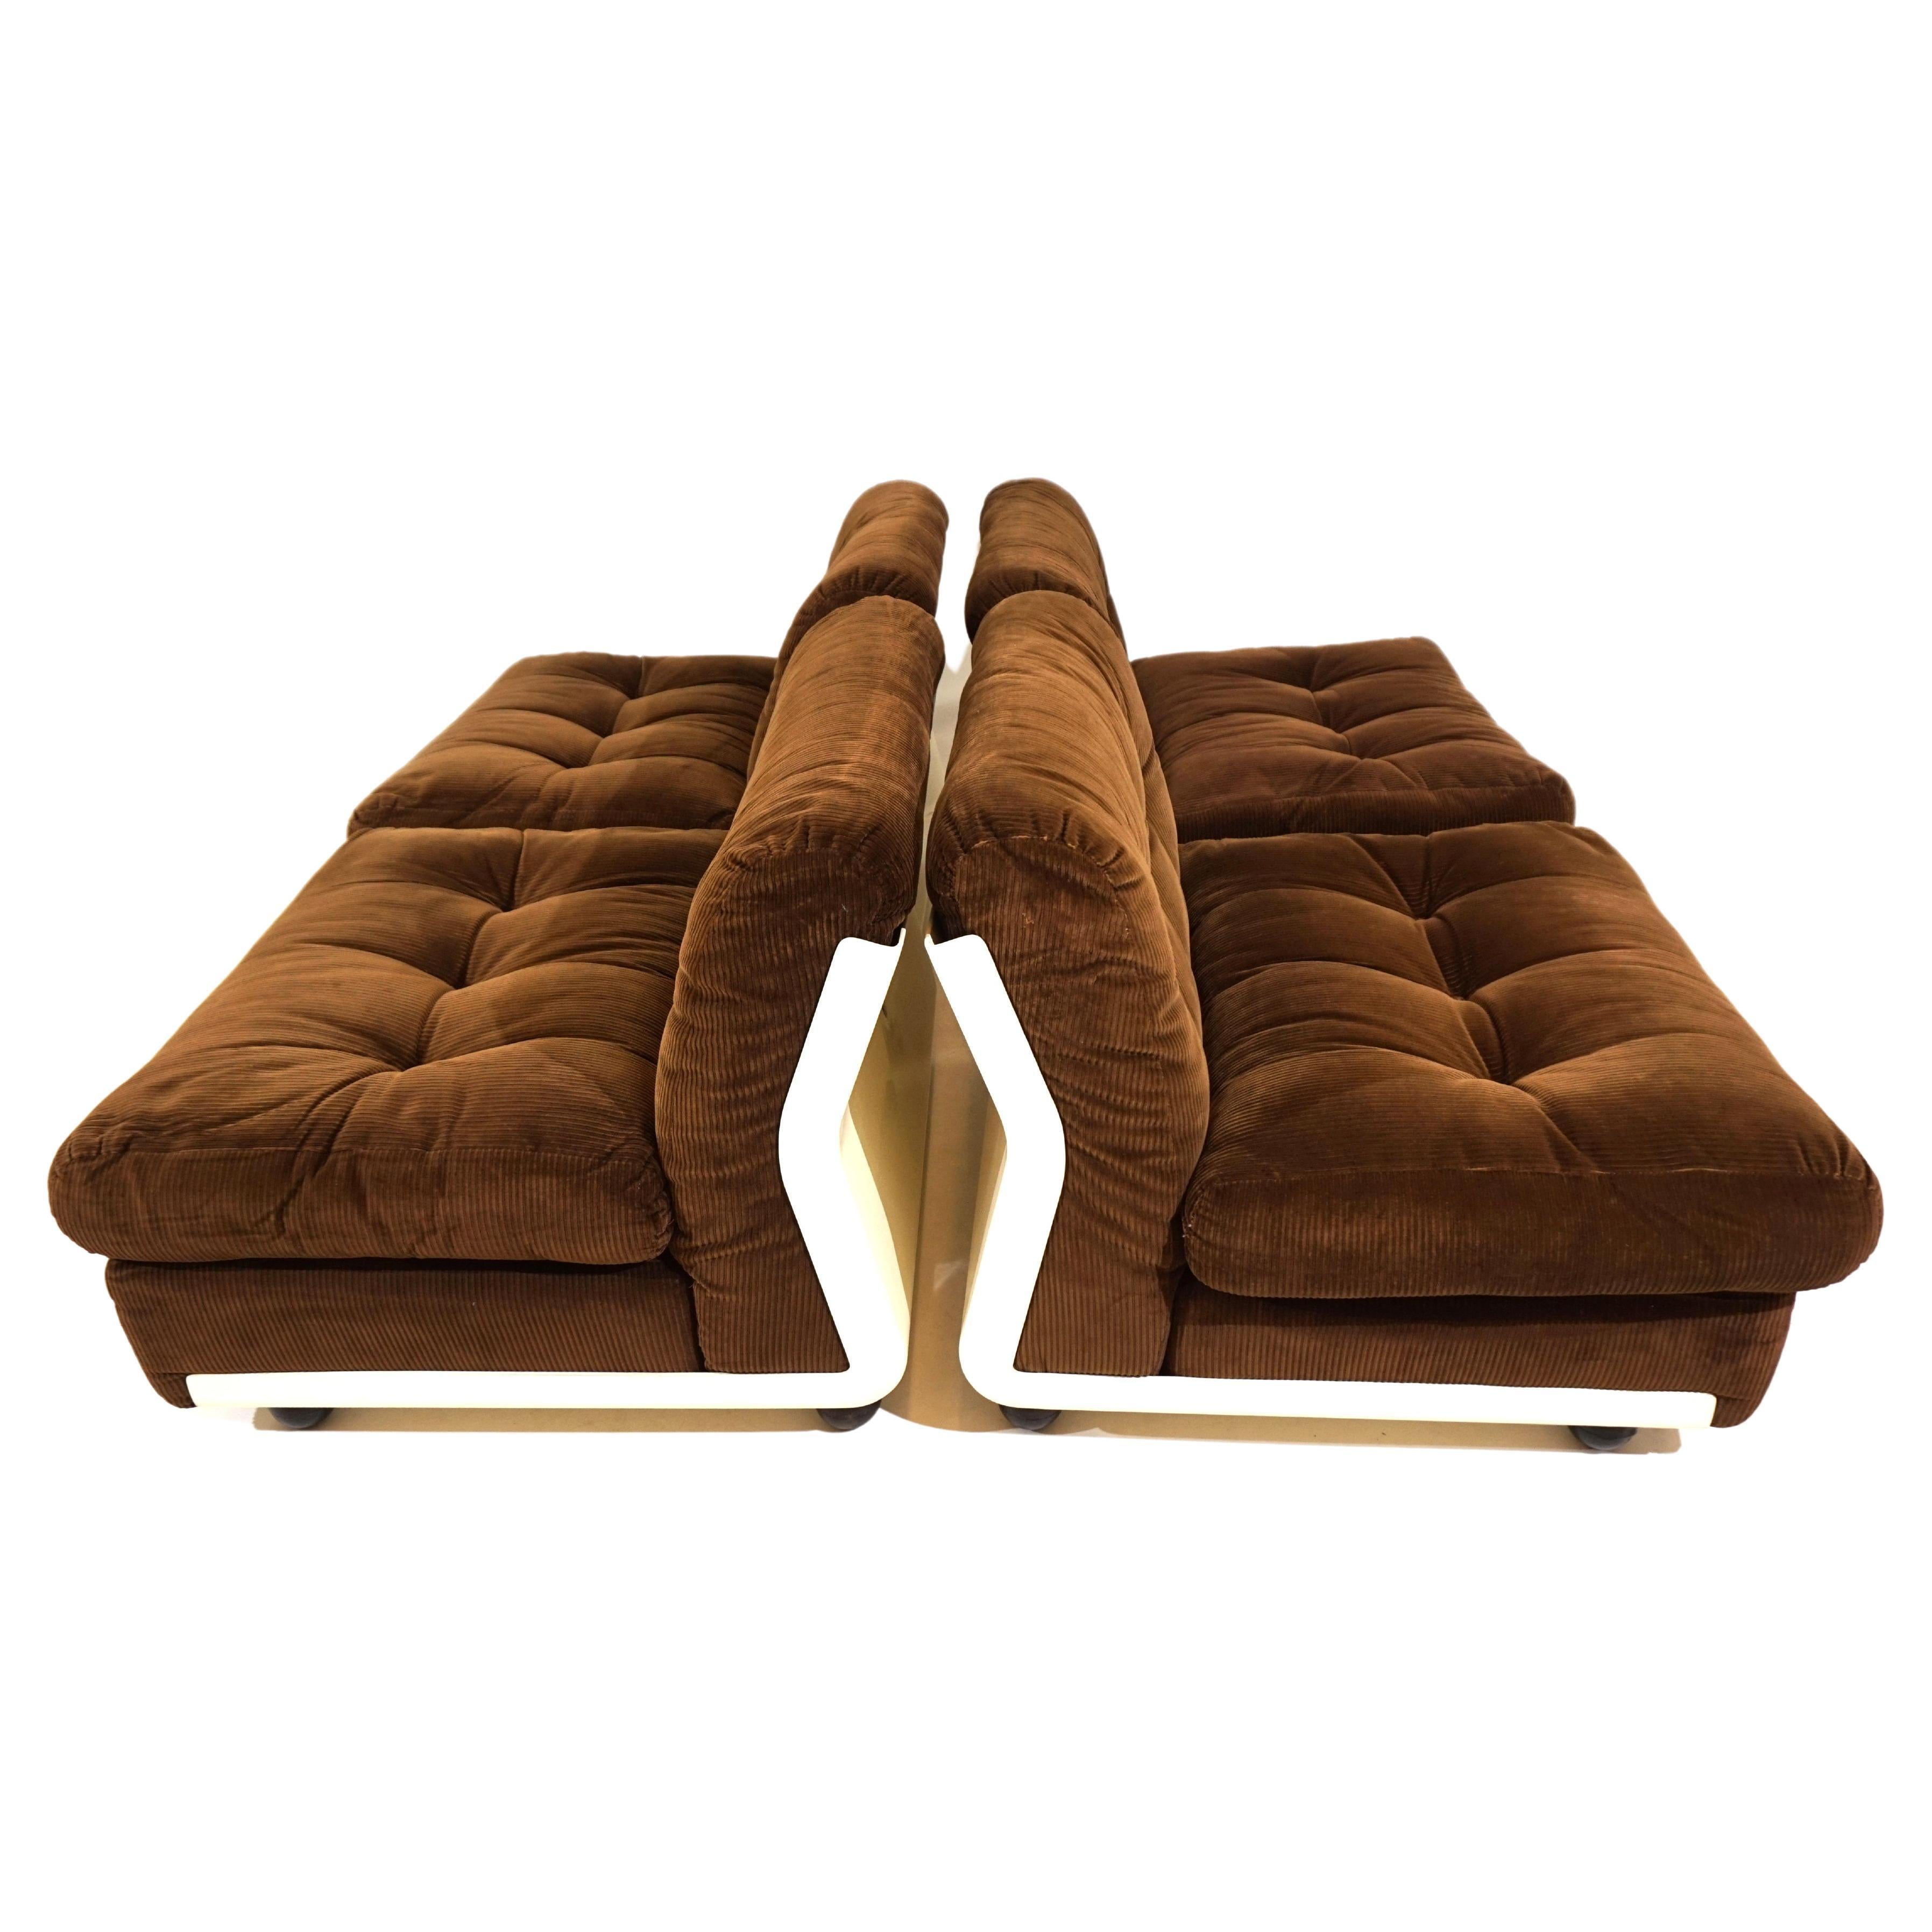 C&B Italia set of 4 Amanta Cord lounge chairs by Mario Bellini